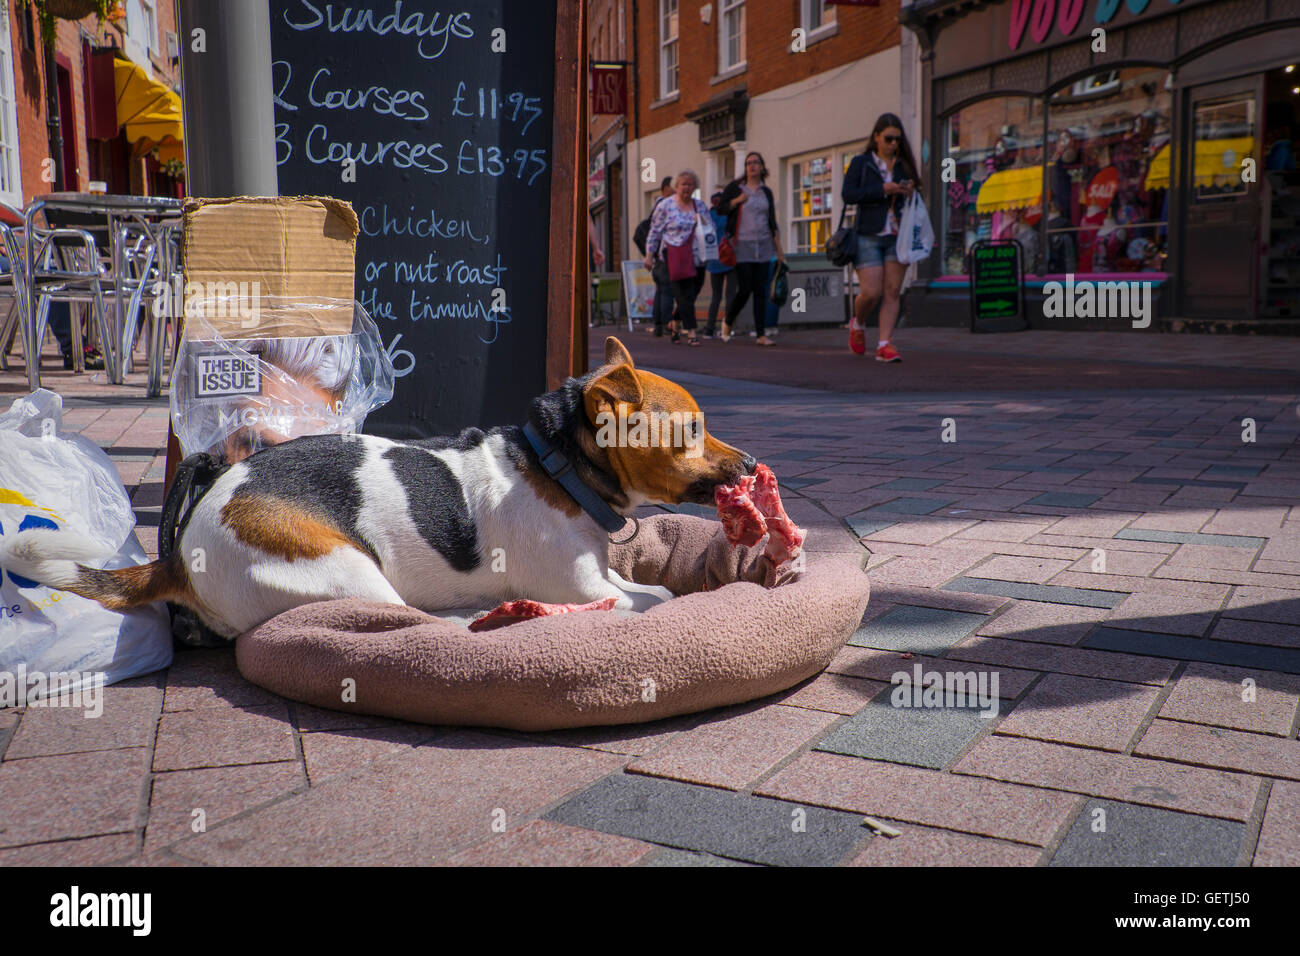 A Big Issue street vendor's dog enjoys a bone while waiting. Stock Photo